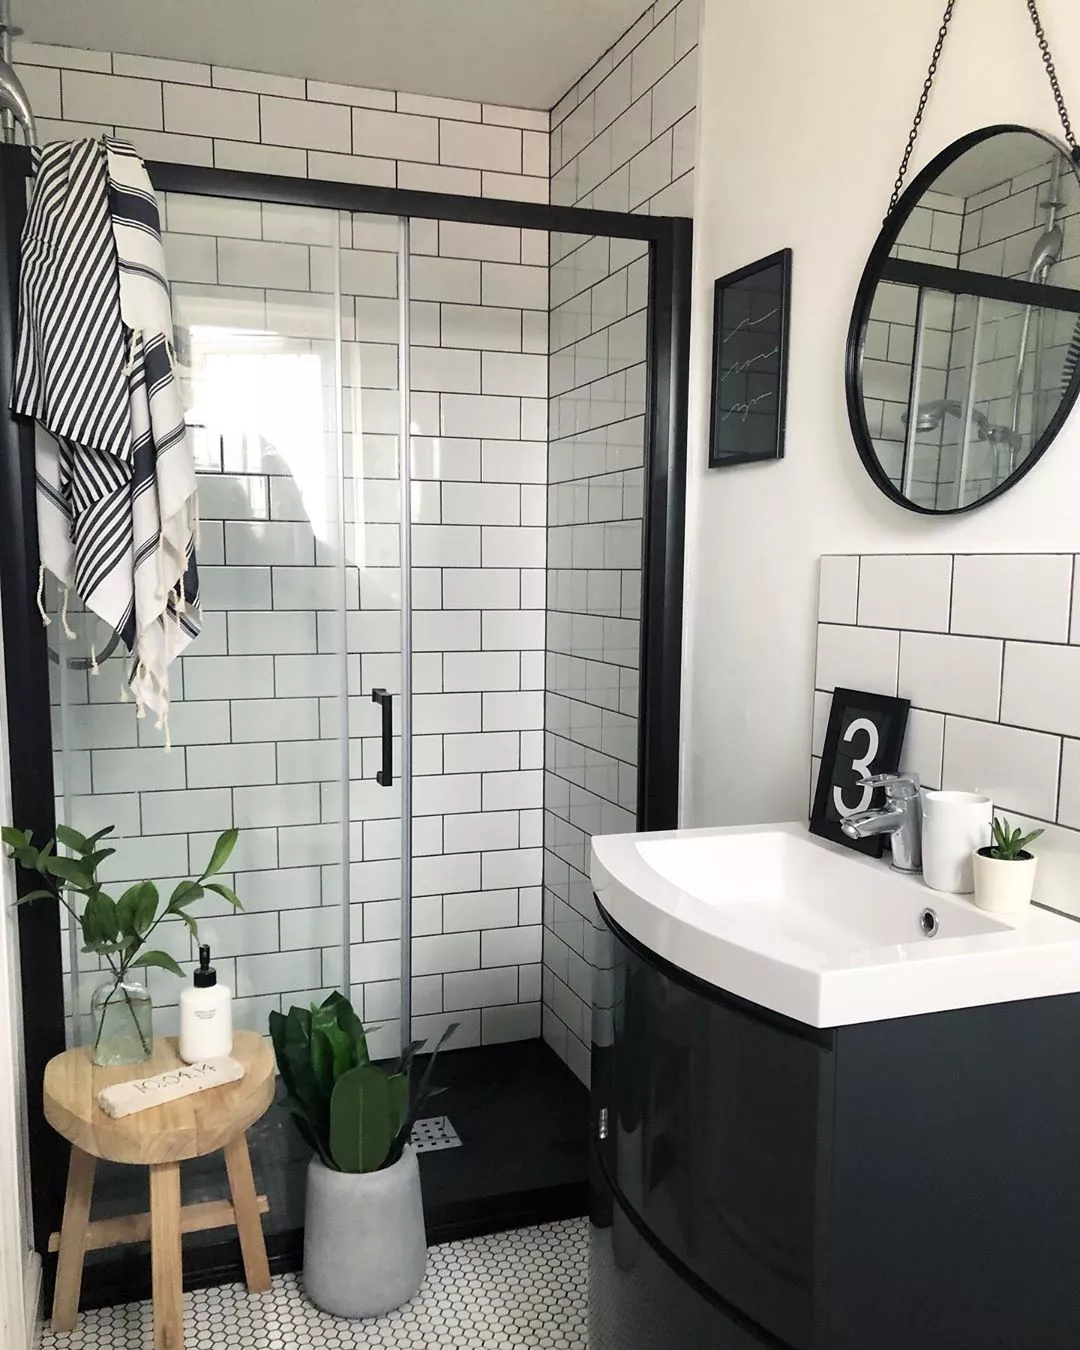 https://www.extraspace.com/blog/wp-content/uploads/2020/01/experiment-tile-minimalist-bathroom-idea.jpg.webp